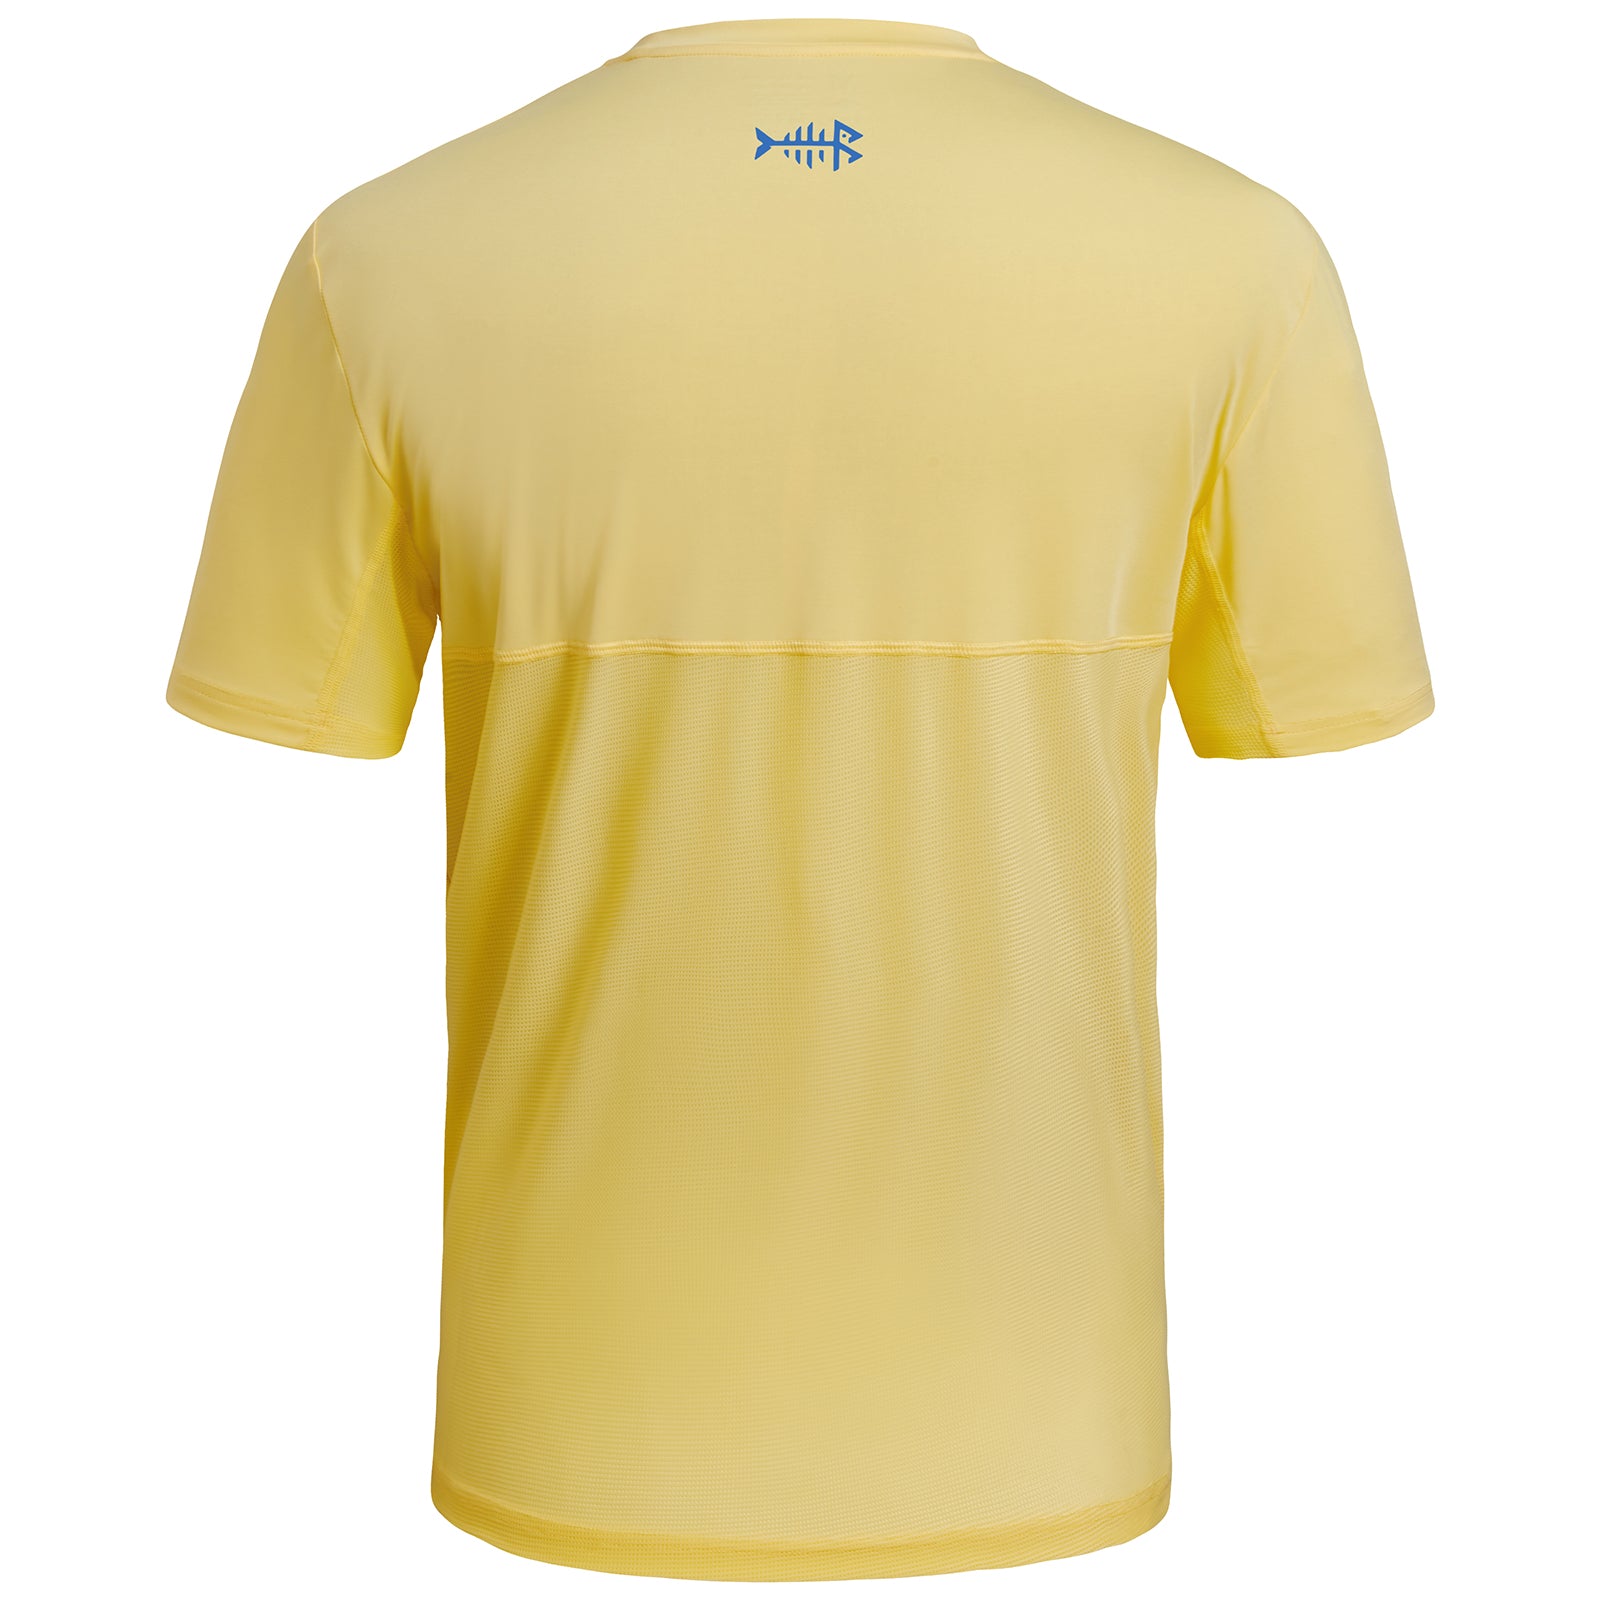 Mens Performance Short Sleeve Button Up Quick Dry Shirt 50+ UPF Fishing  Shirt, Navy, Size: L, Momentum Comfort Gear